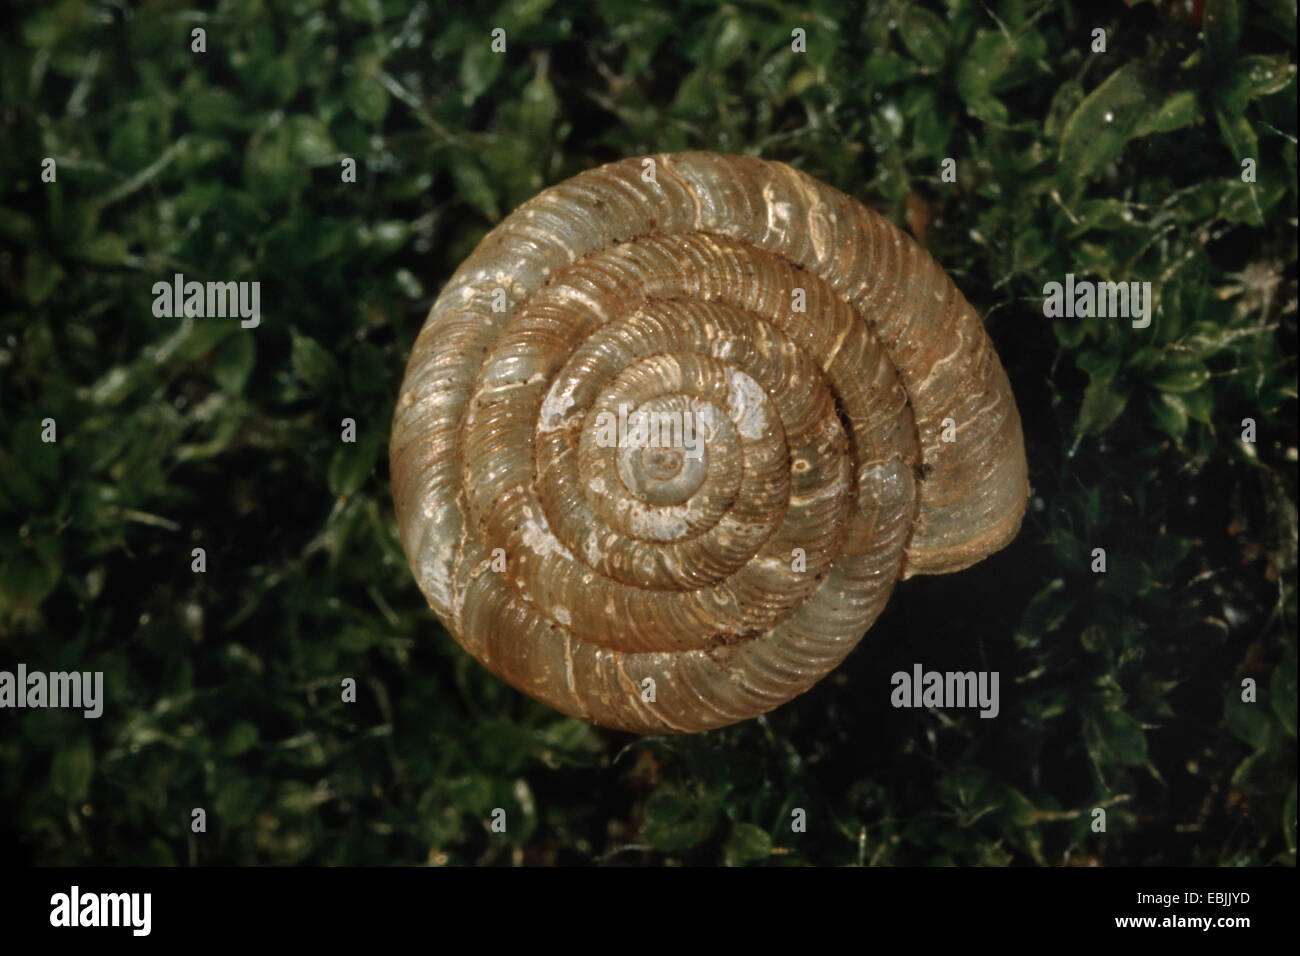 Redondea el caracol, rechoncho disco radiado, Caracol Caracol (Discus rotundatus, Goniodiscus rotundatus), vista superior del shell Foto de stock